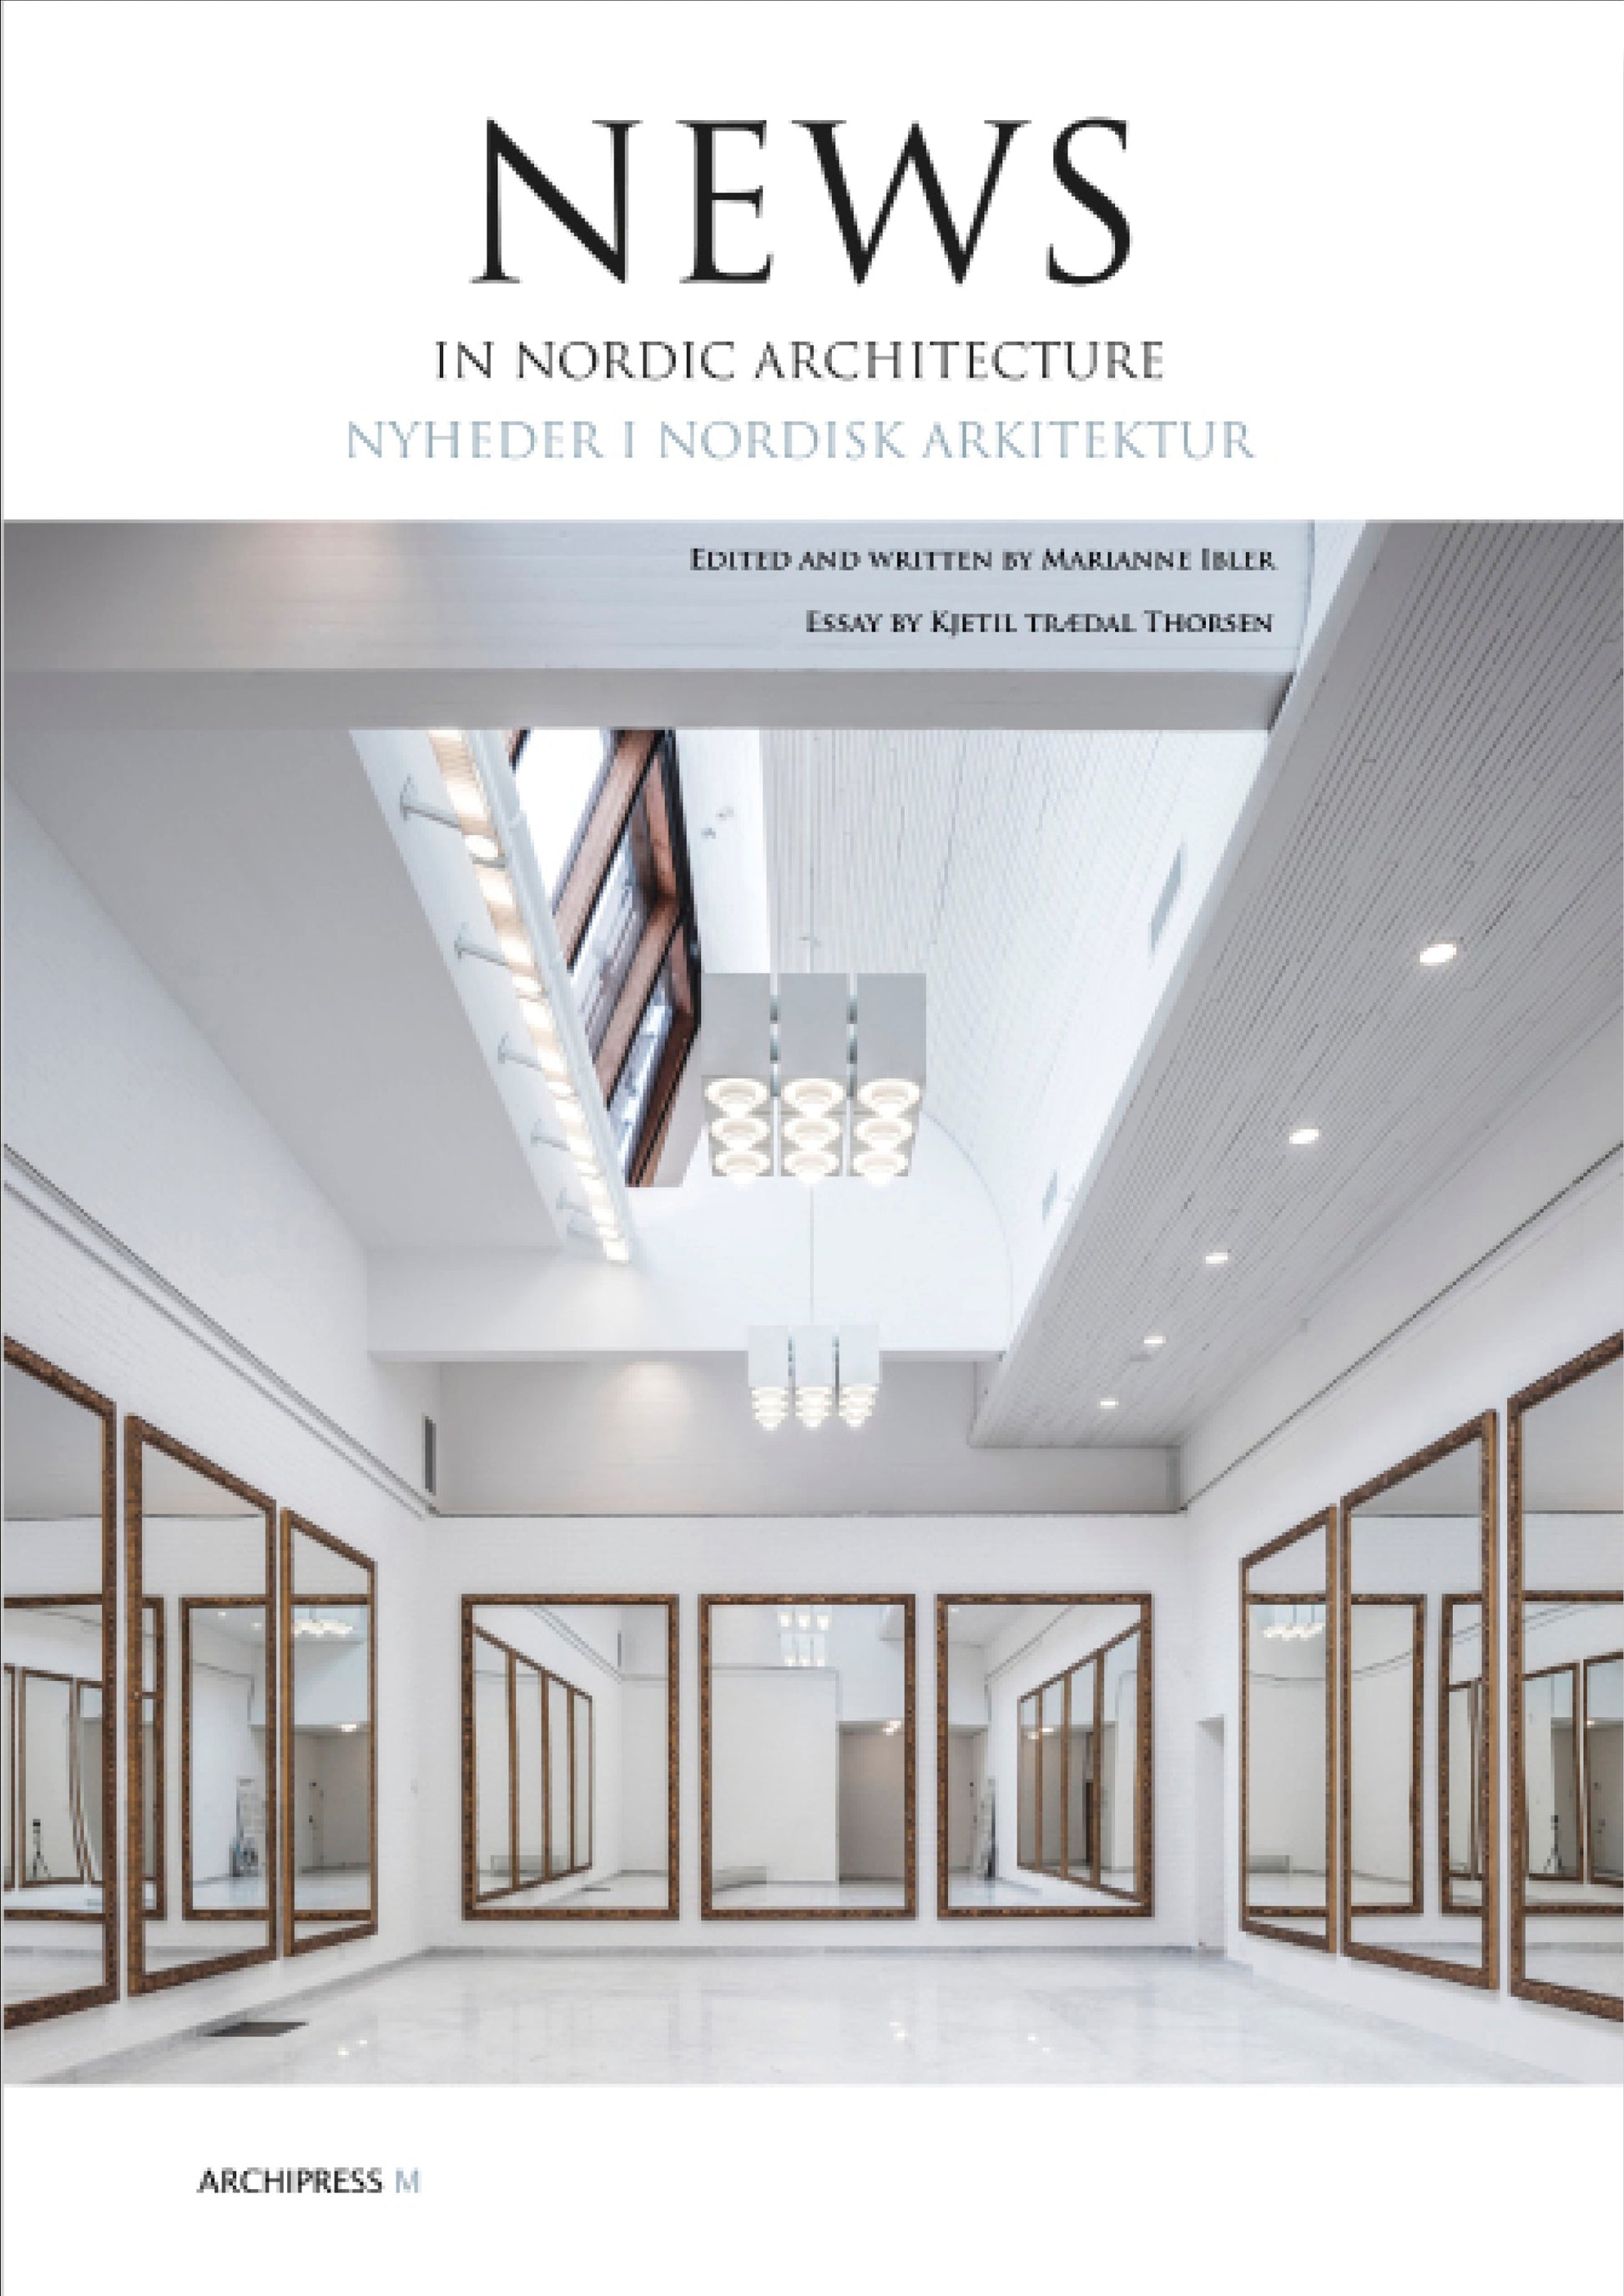 News in Nordic Architecture